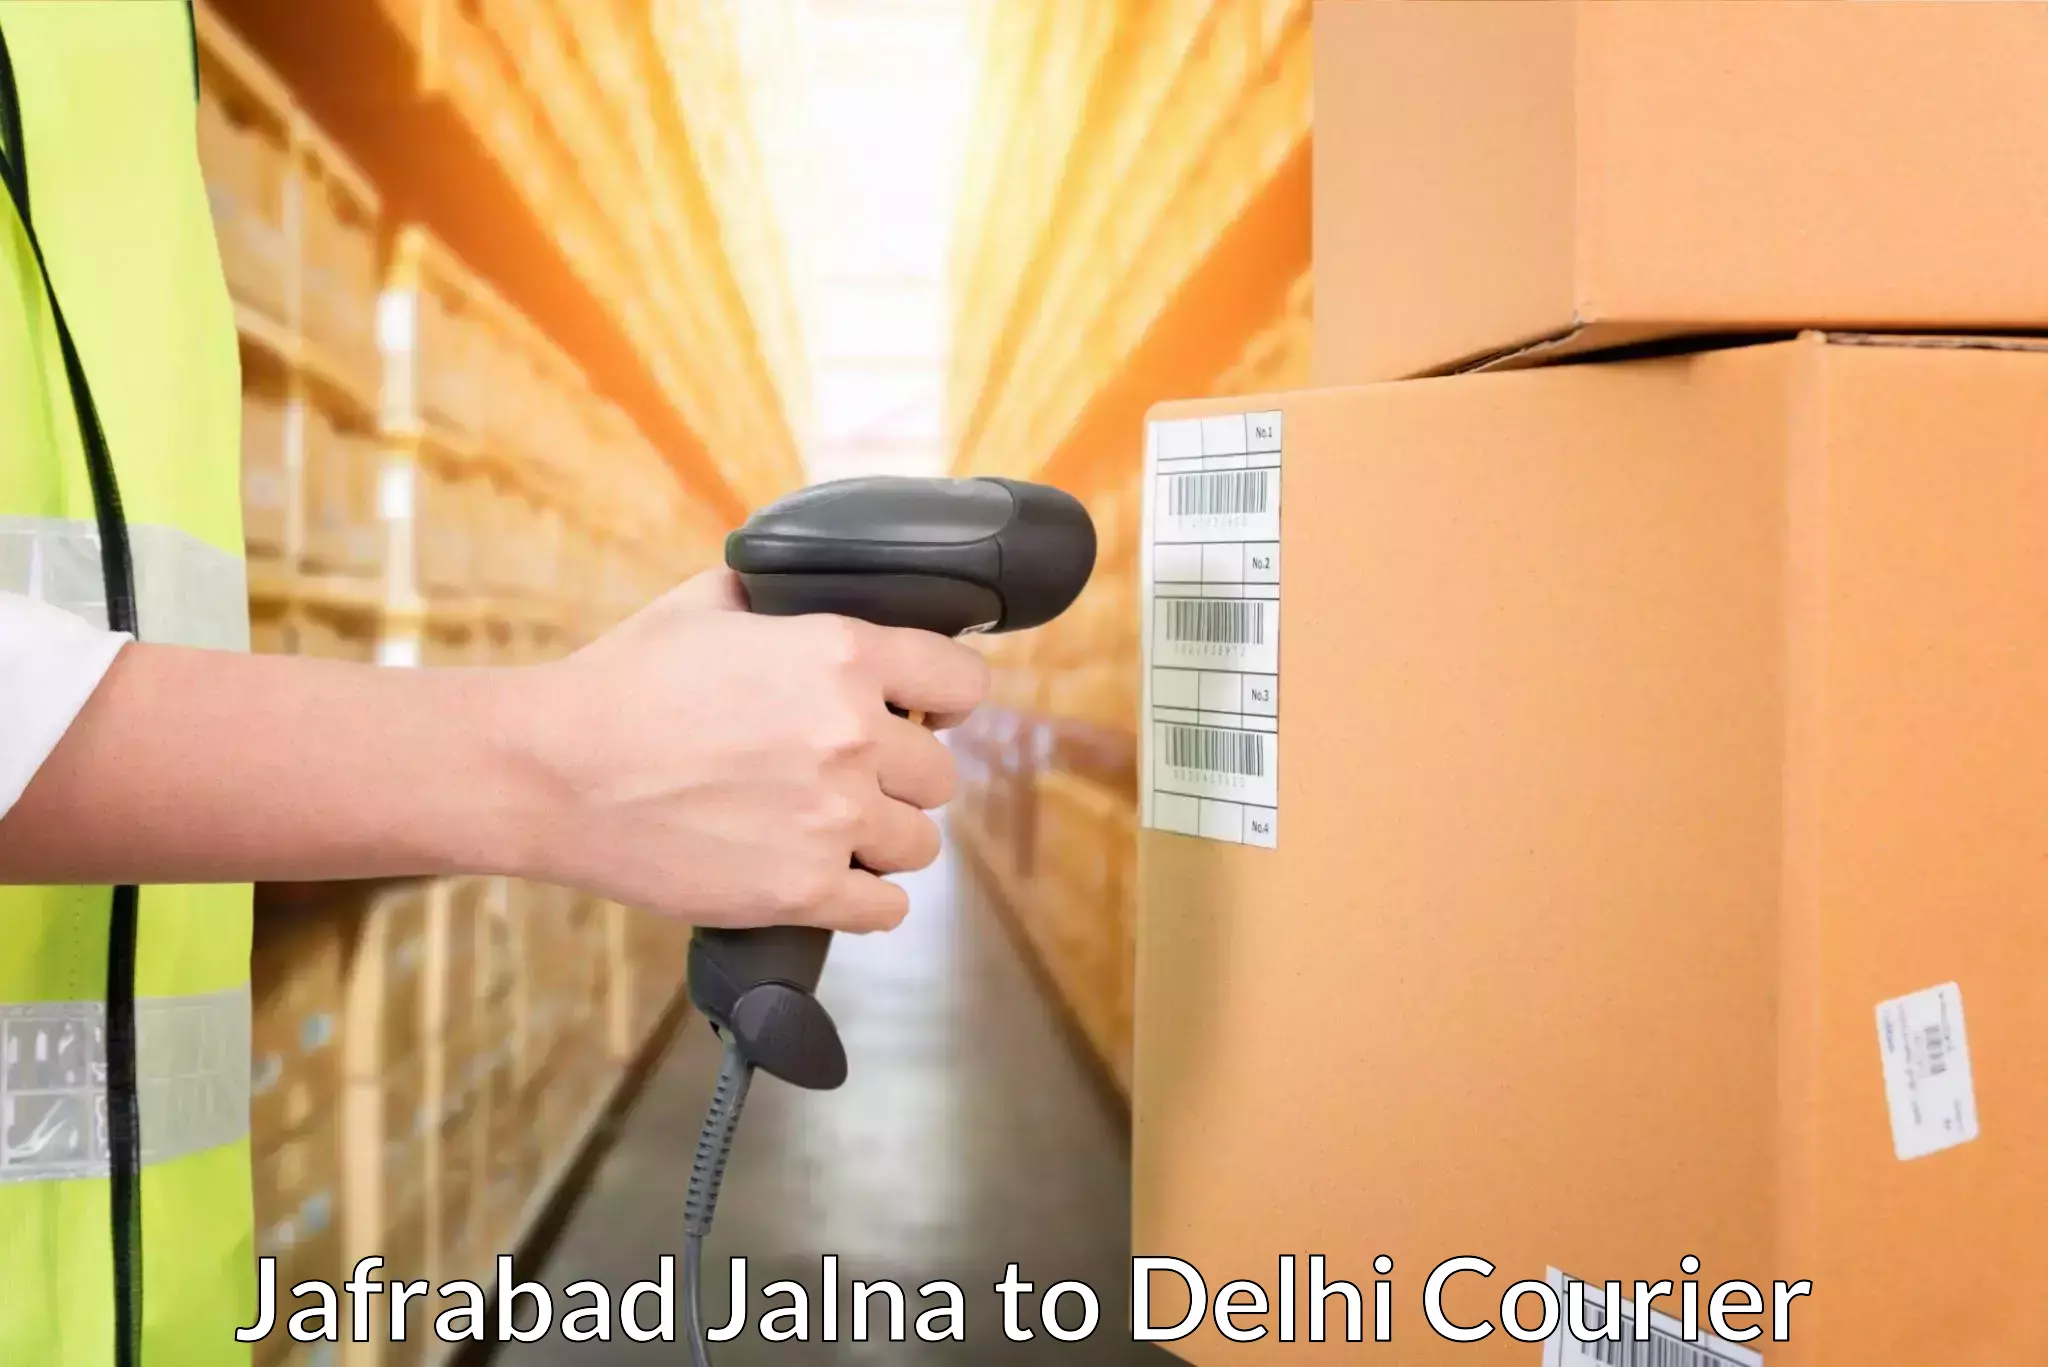 Courier service efficiency Jafrabad Jalna to Delhi